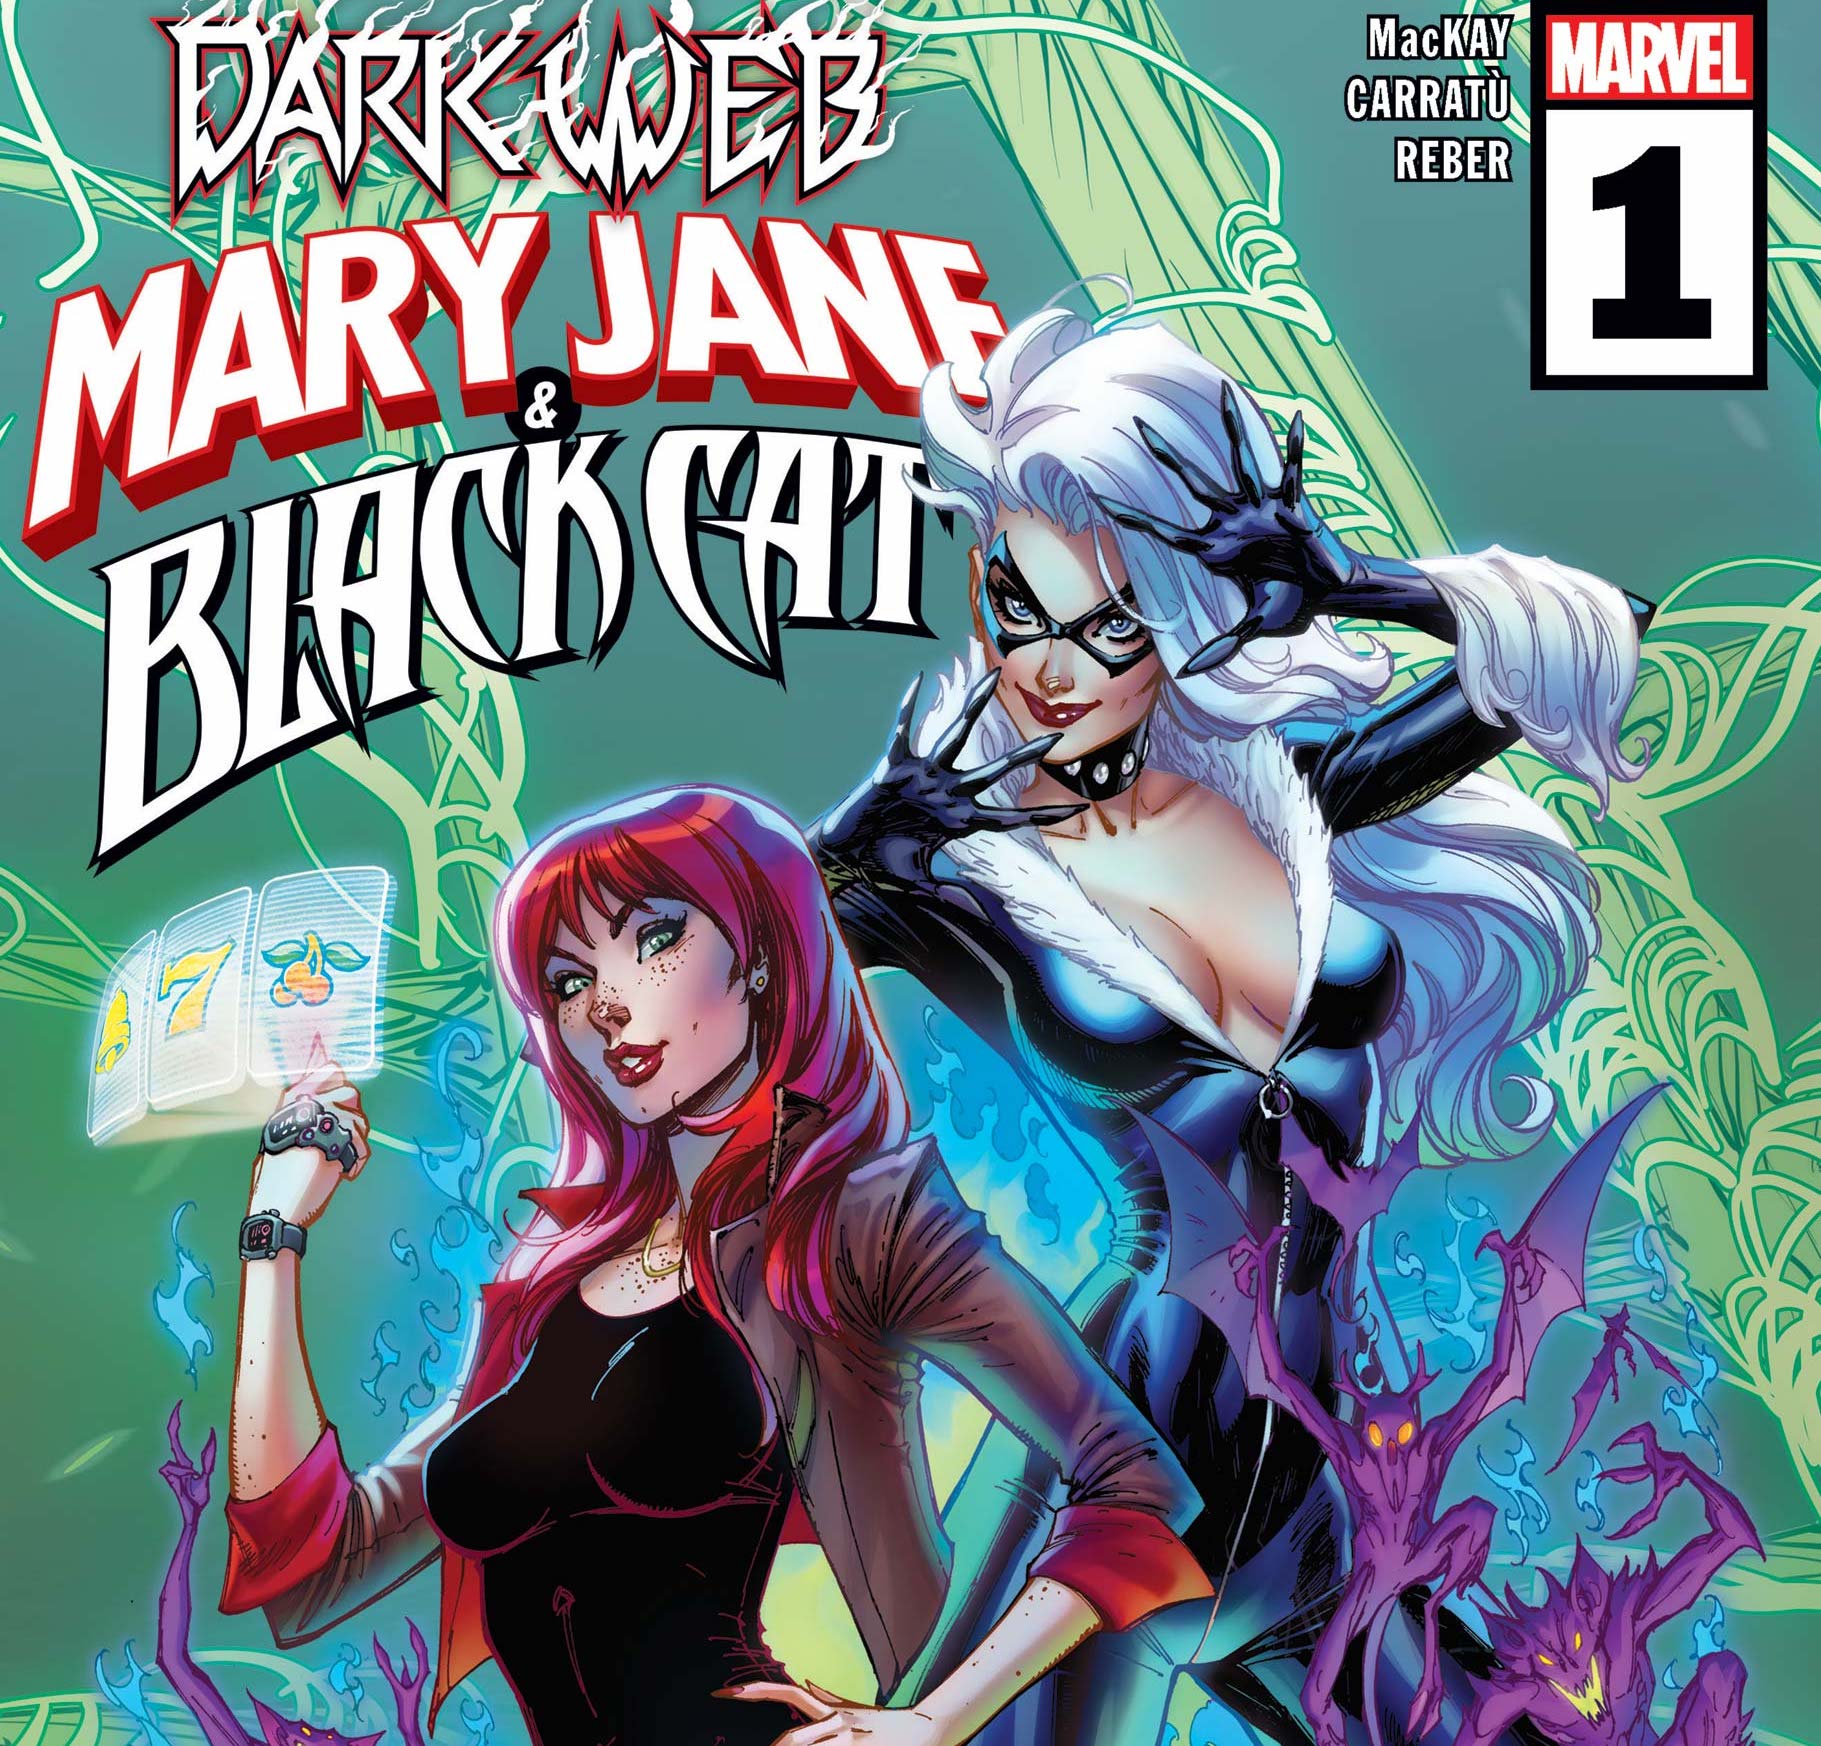 'Mary Jane & Black Cat' #1 reveals a big superpower secret